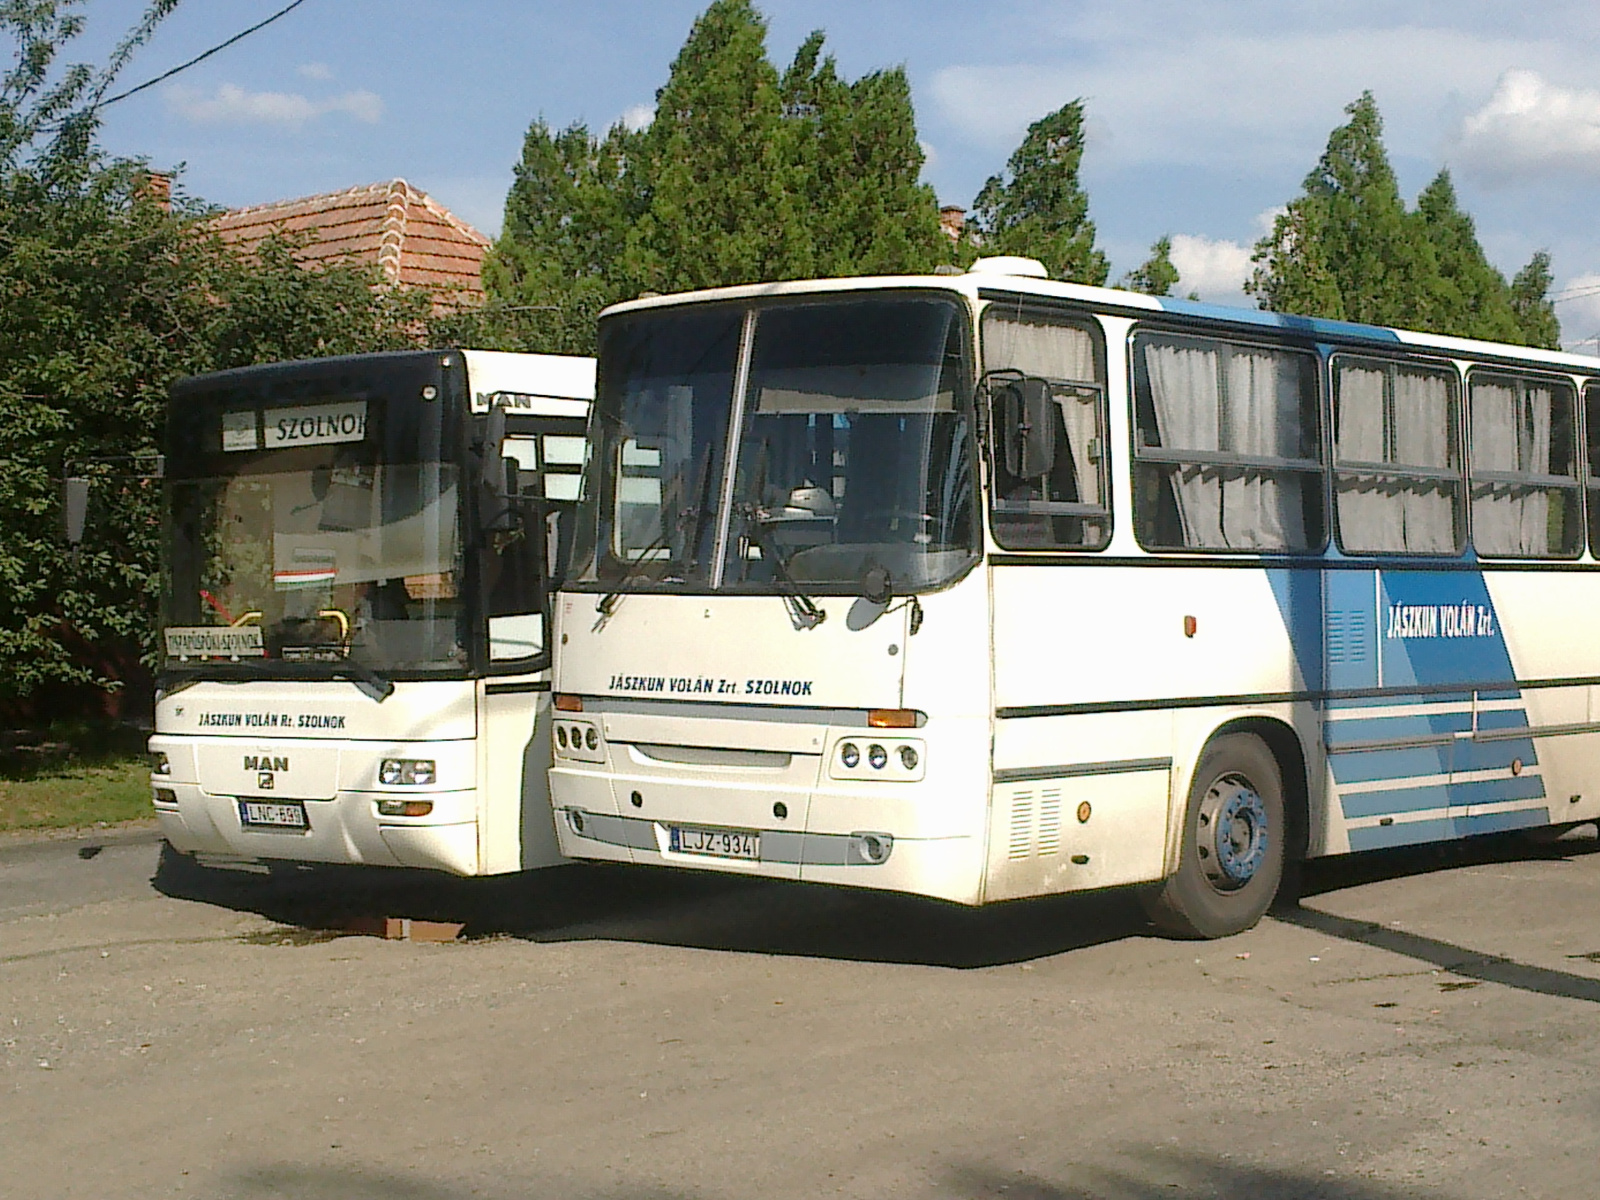 LJZ-934,LNC-699